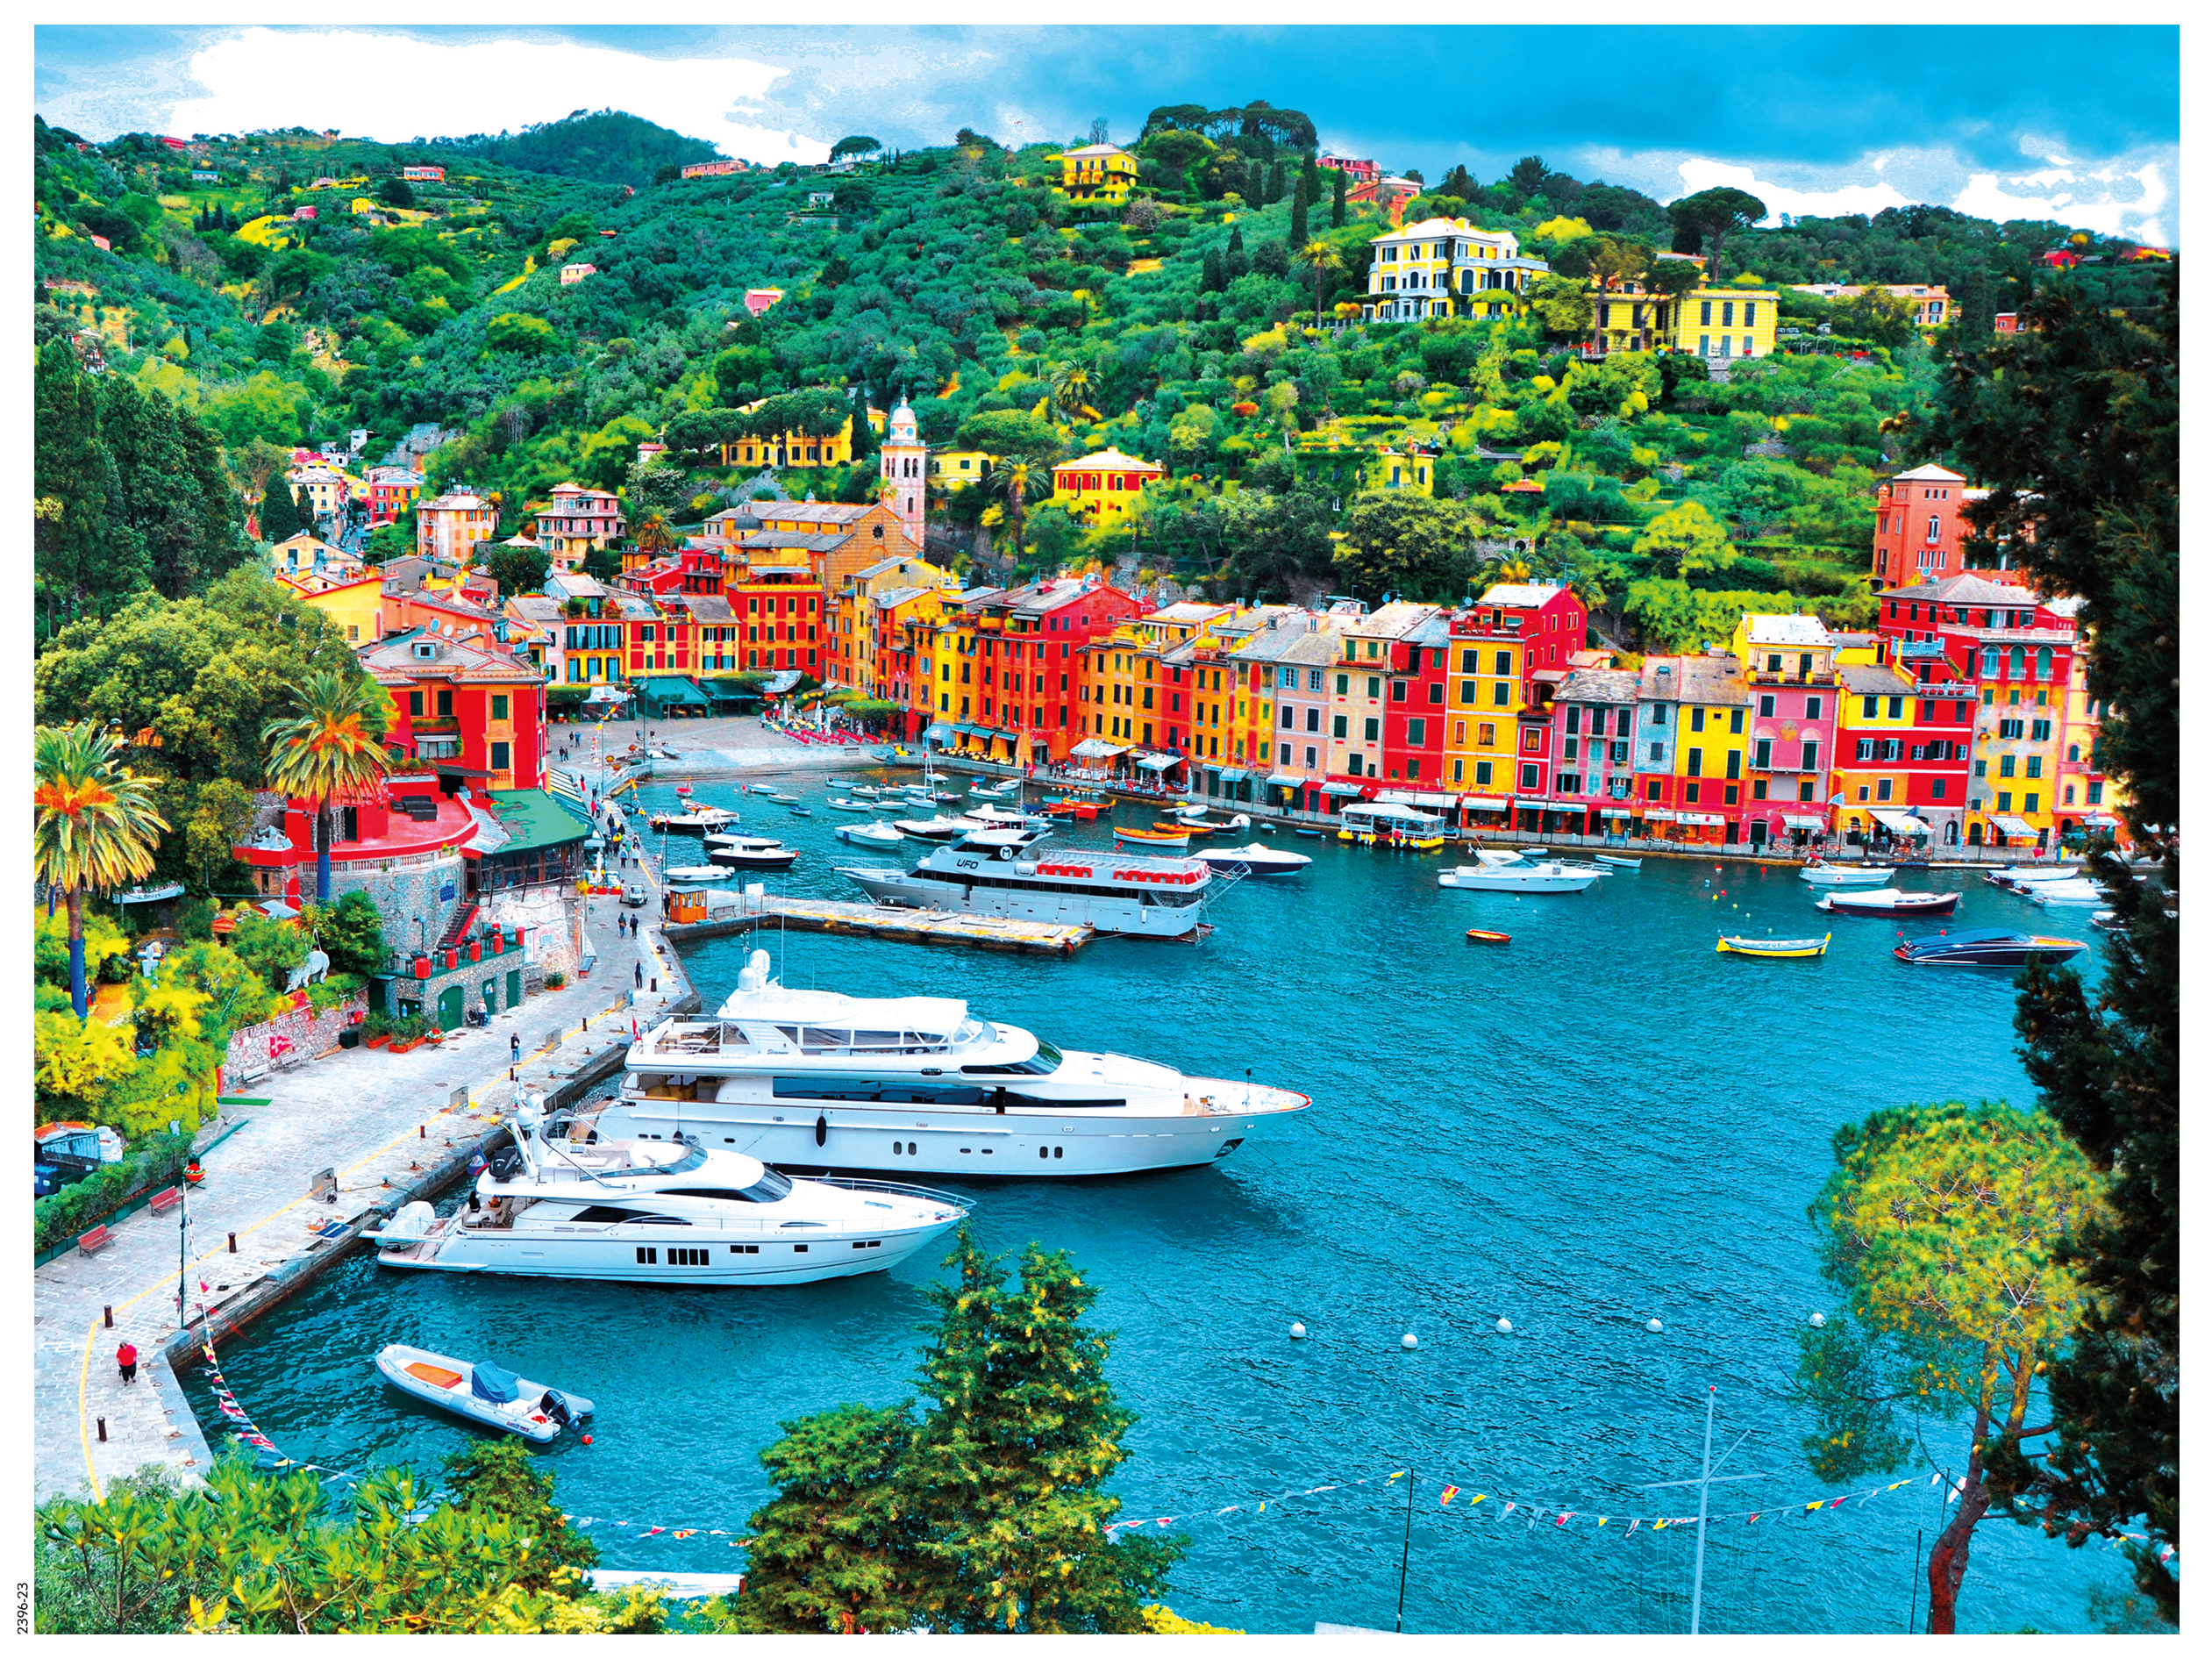 Portofino Italy - Around the World